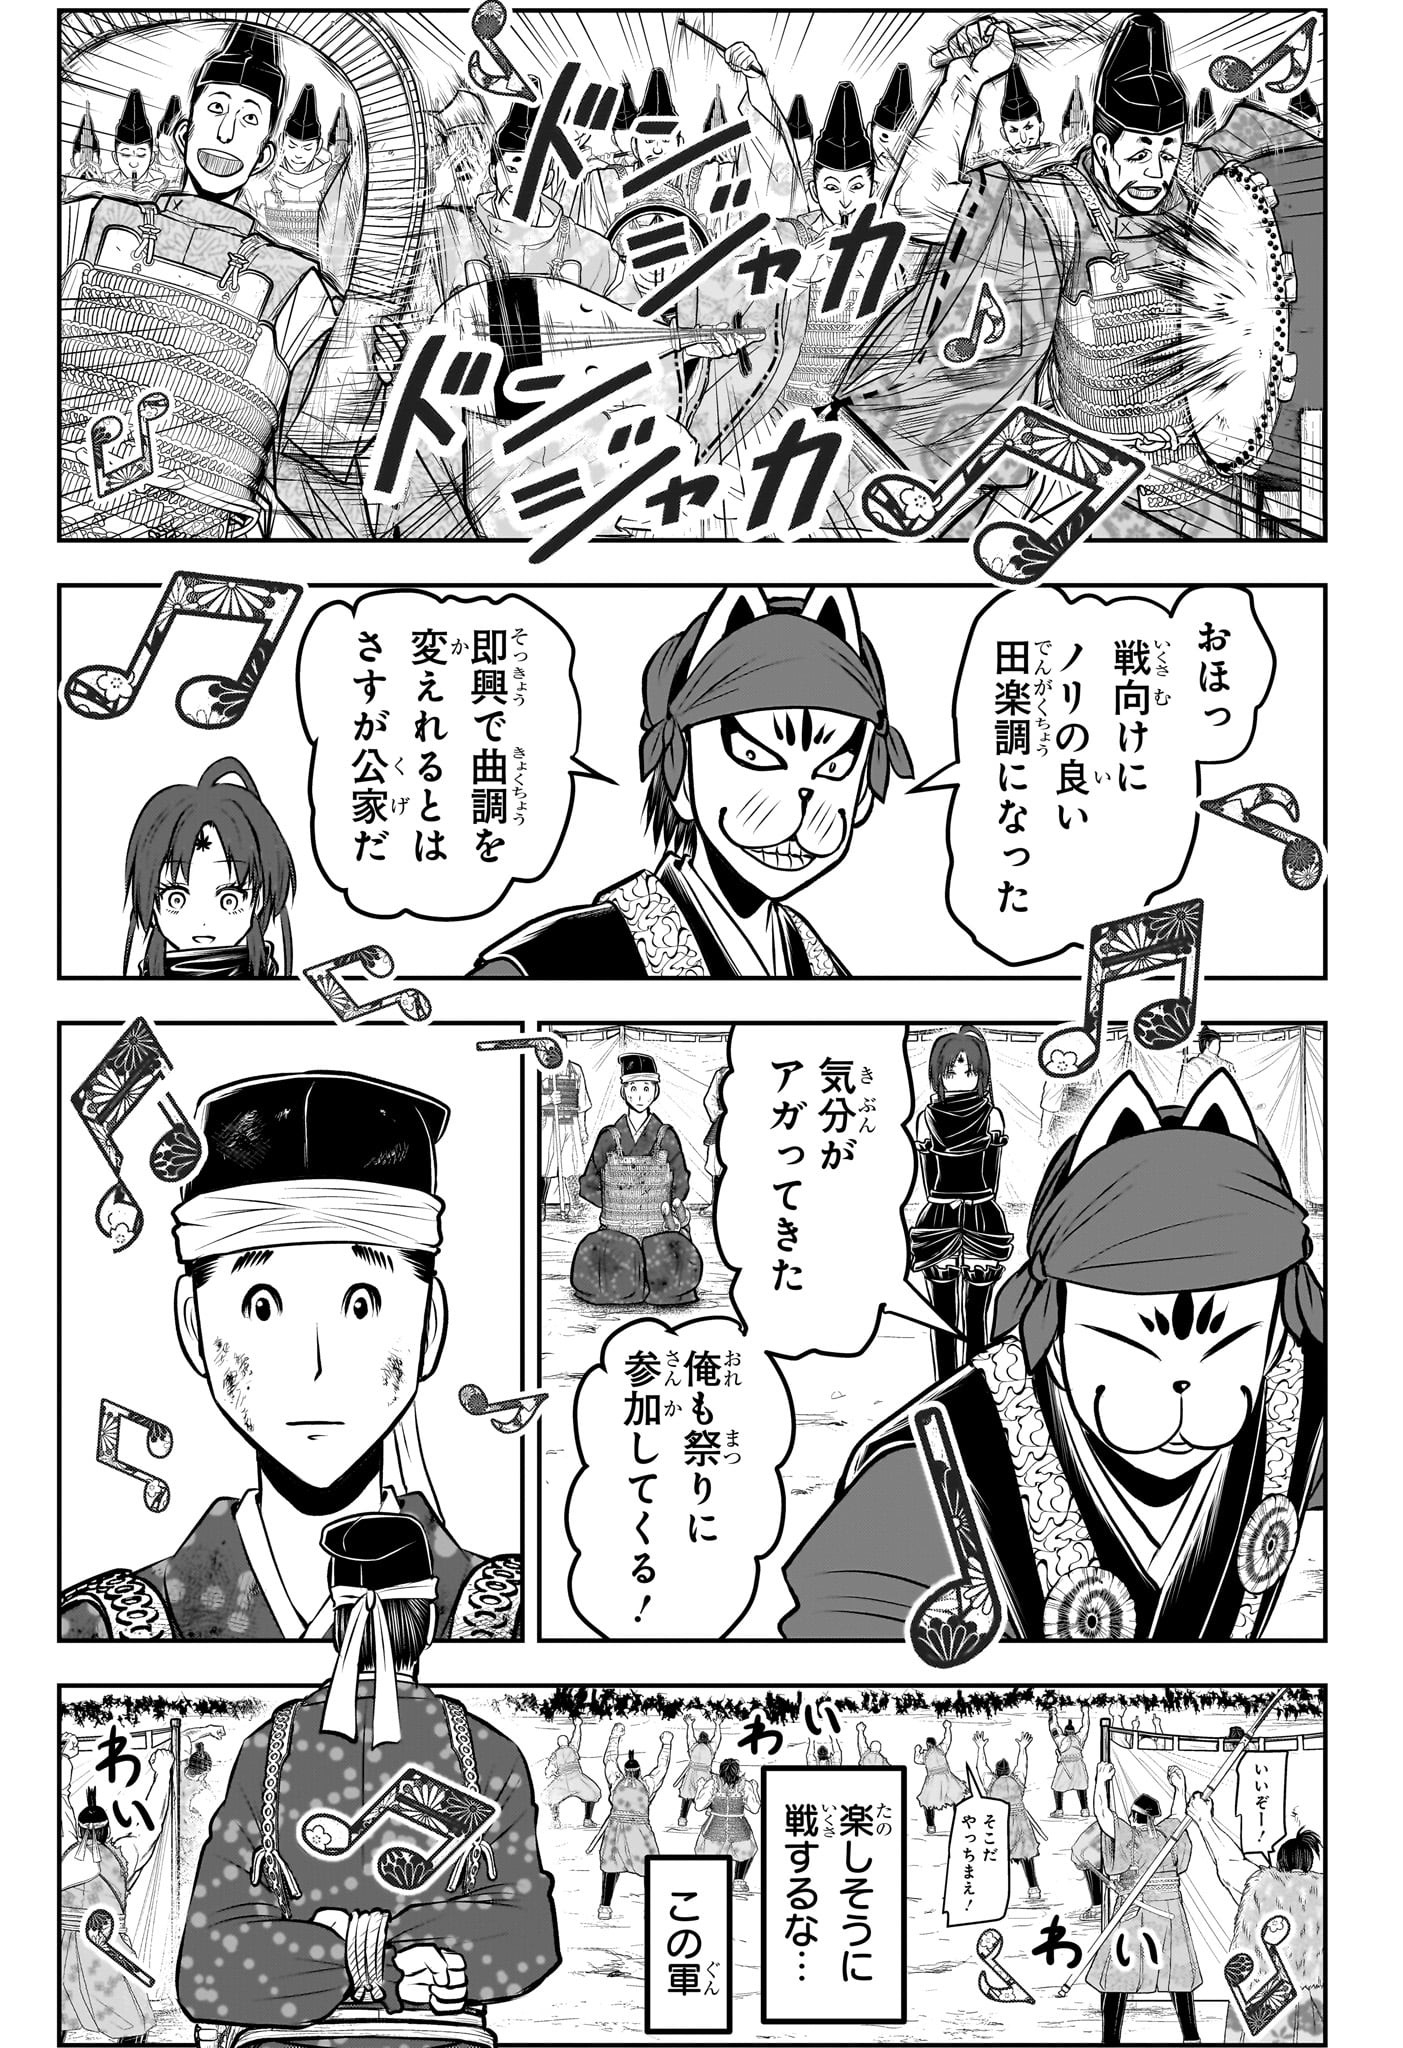 Nige Jouzu no Wakagimi - Chapter 145 - Page 7